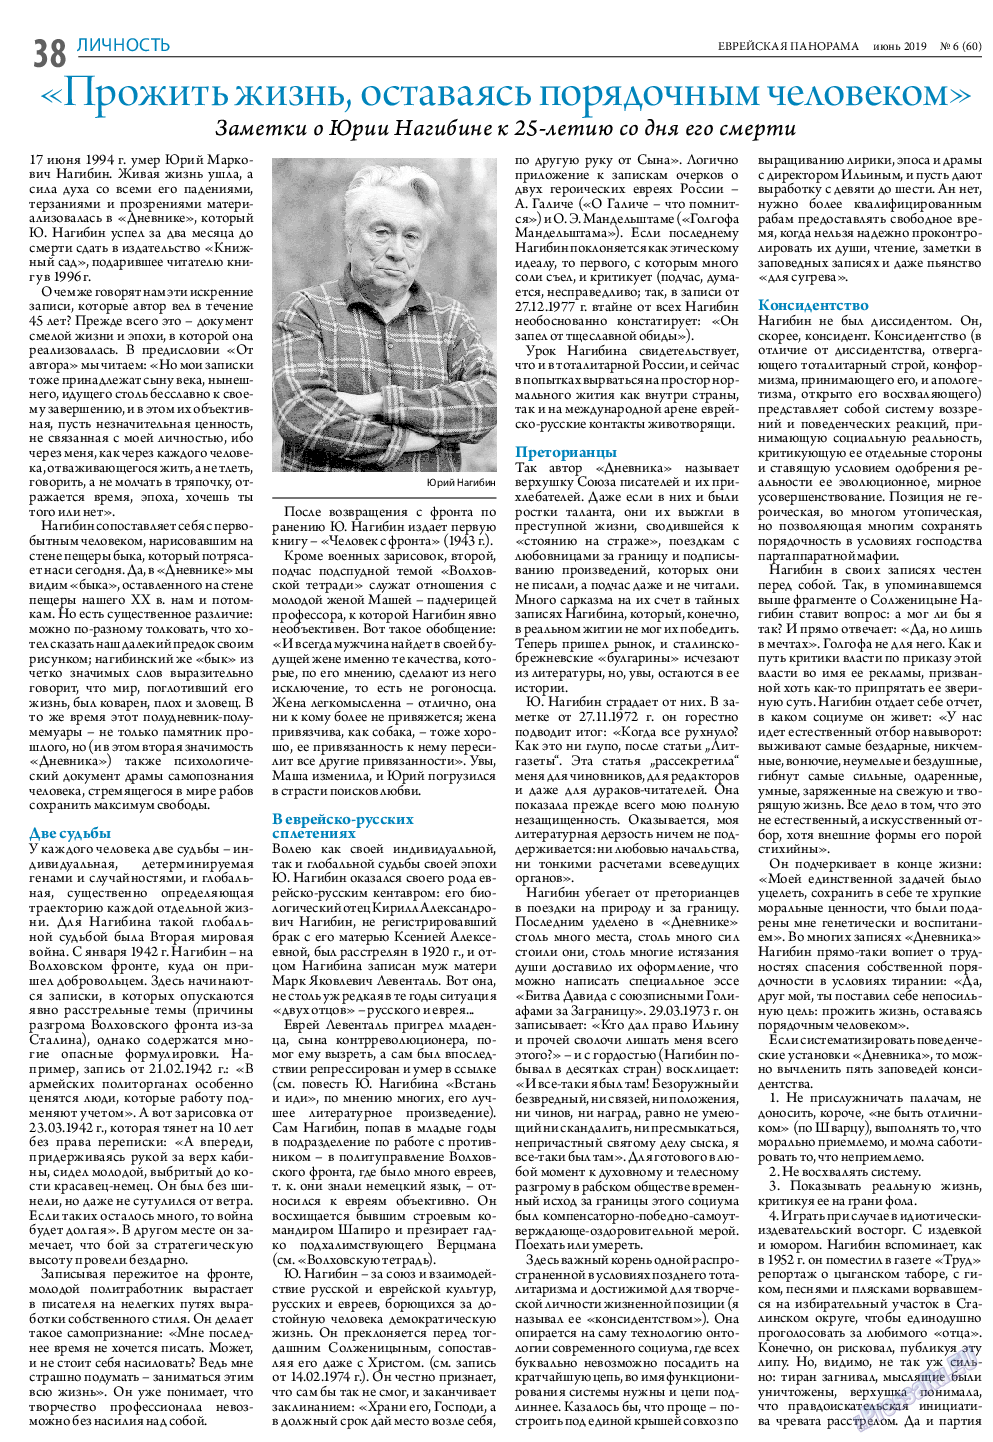 Еврейская панорама, газета. 2019 №6 стр.38